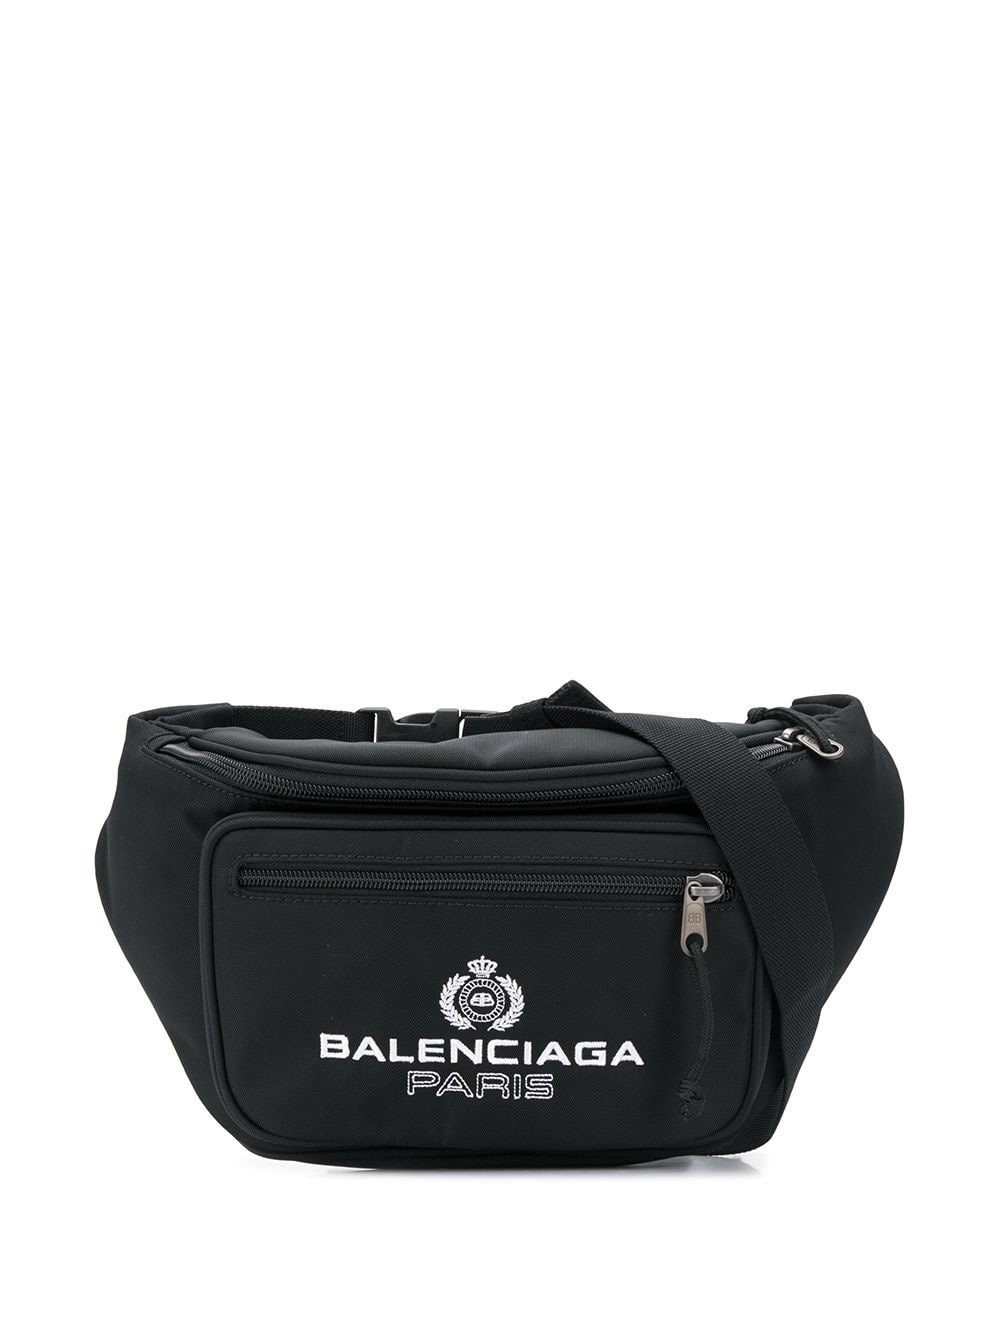 balenciaga PARIS BELT BAG available on 